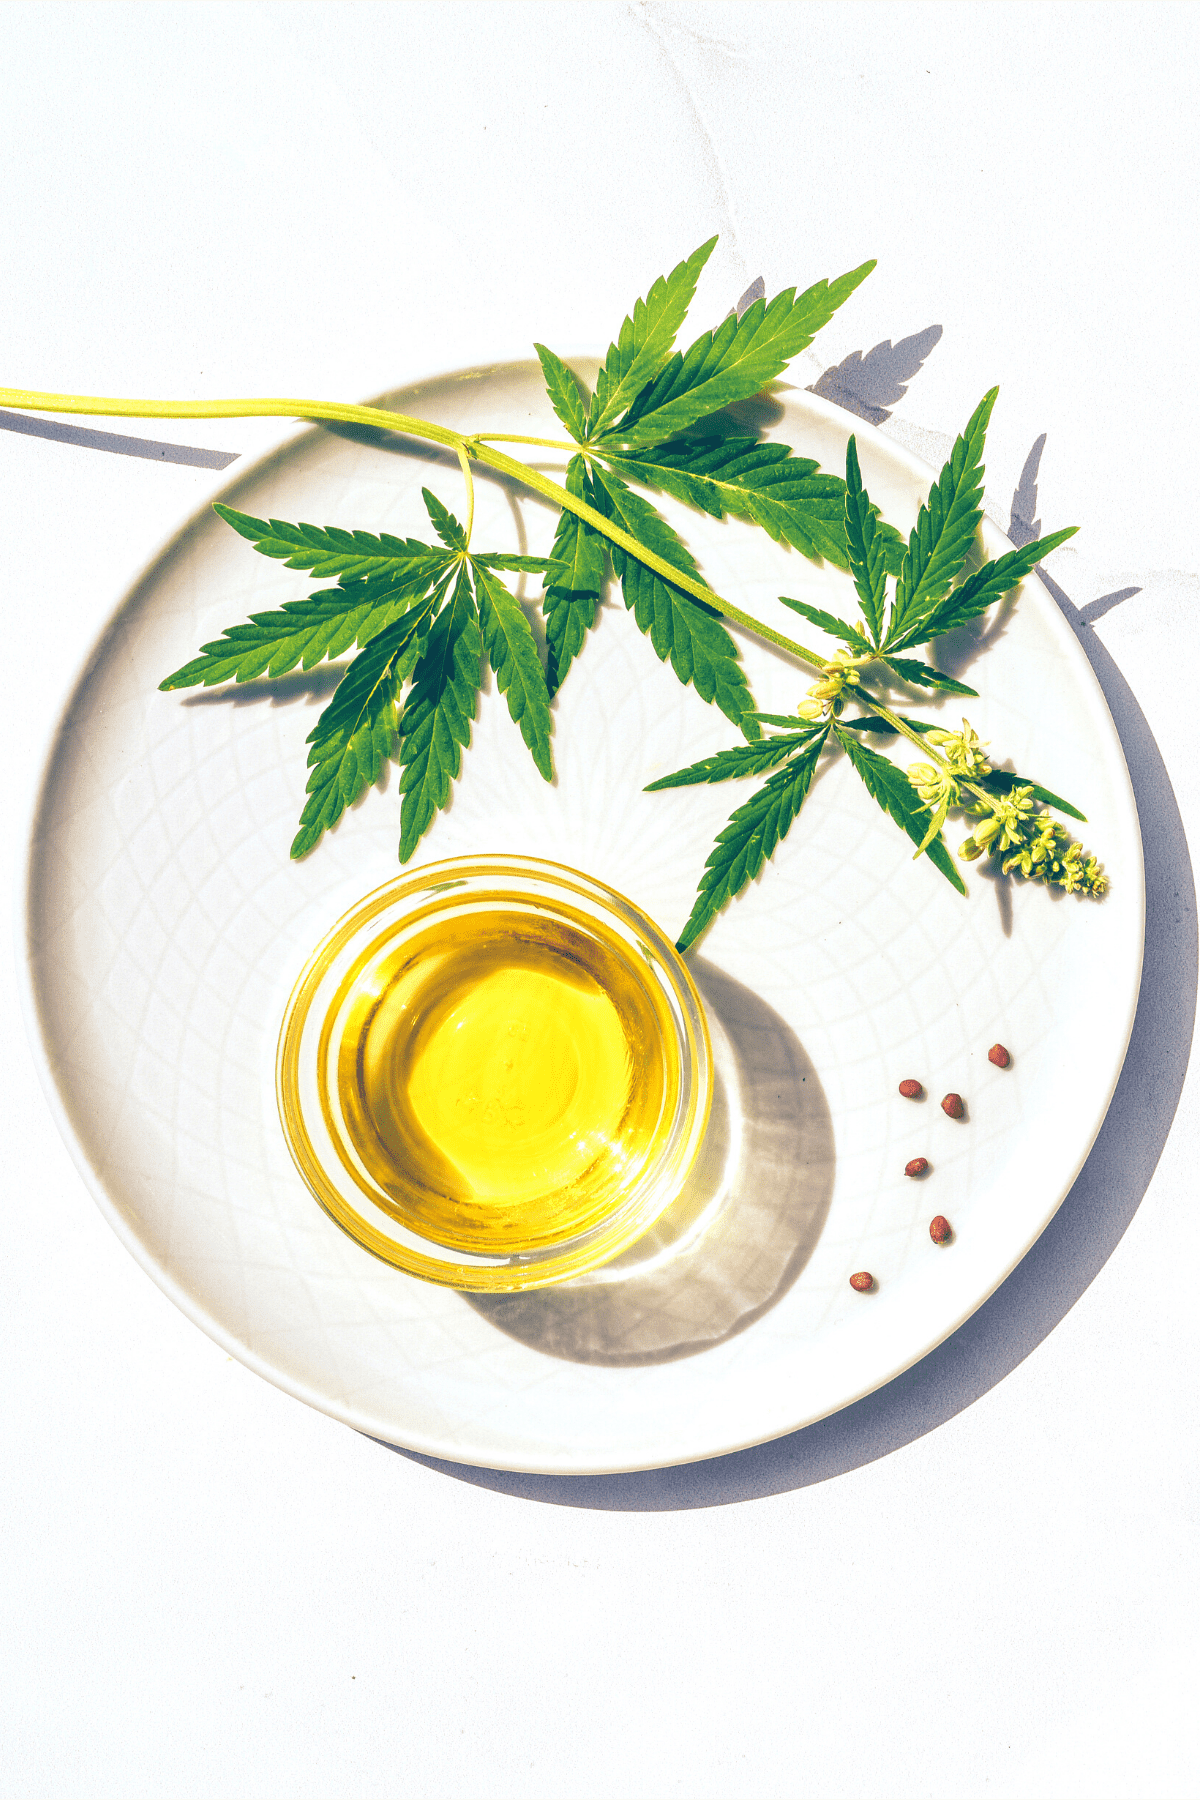 A white plate with a cannabis leaf and cannabis oil